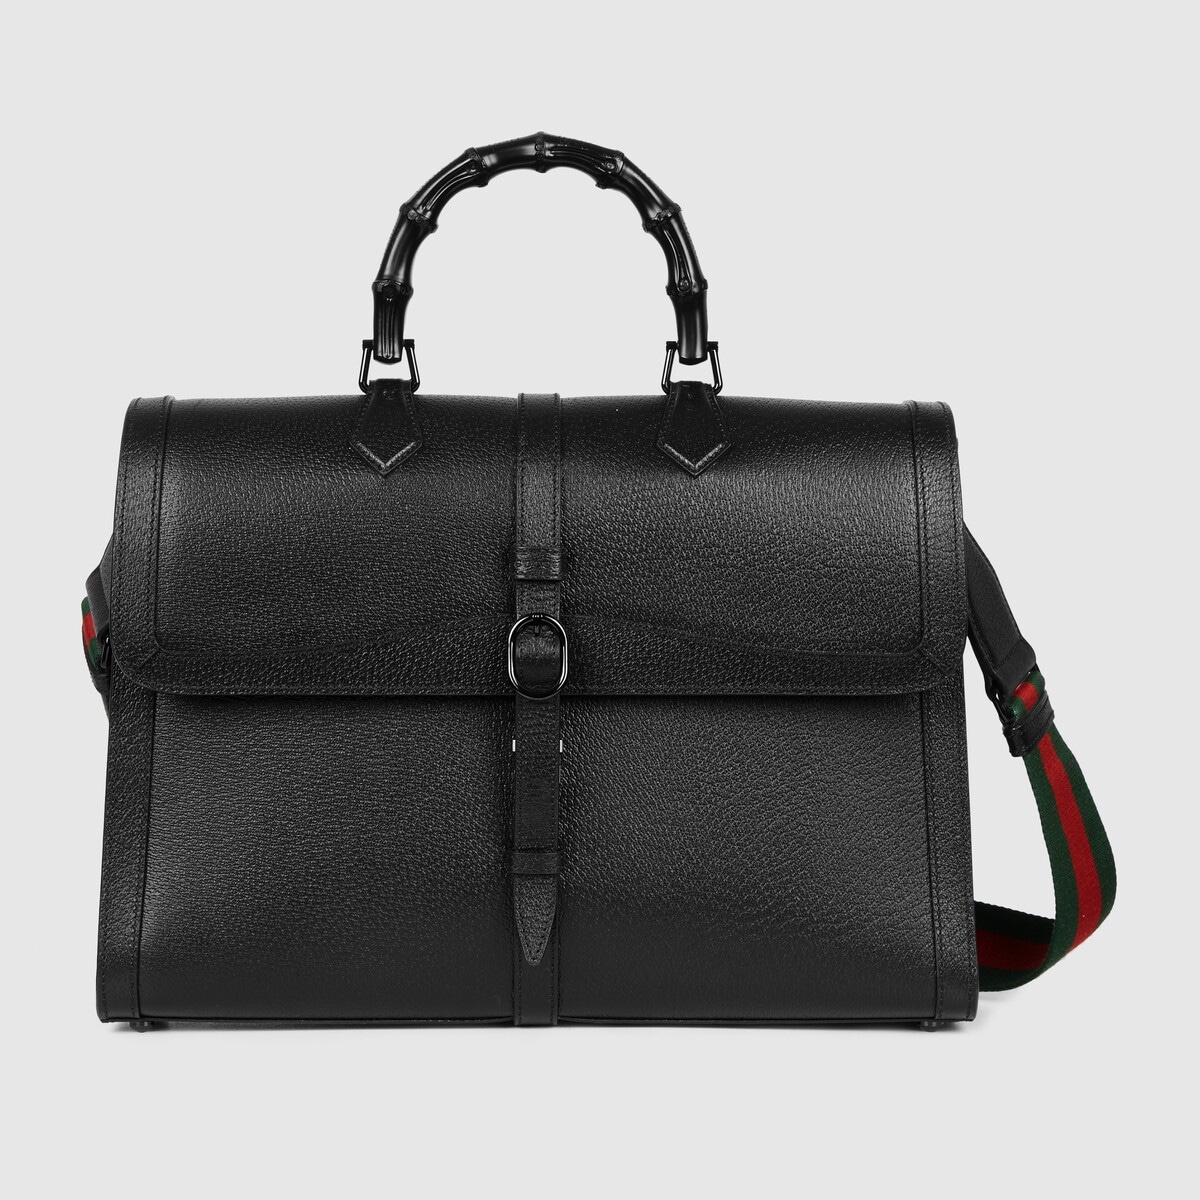 Gucci Diana briefcase - 1